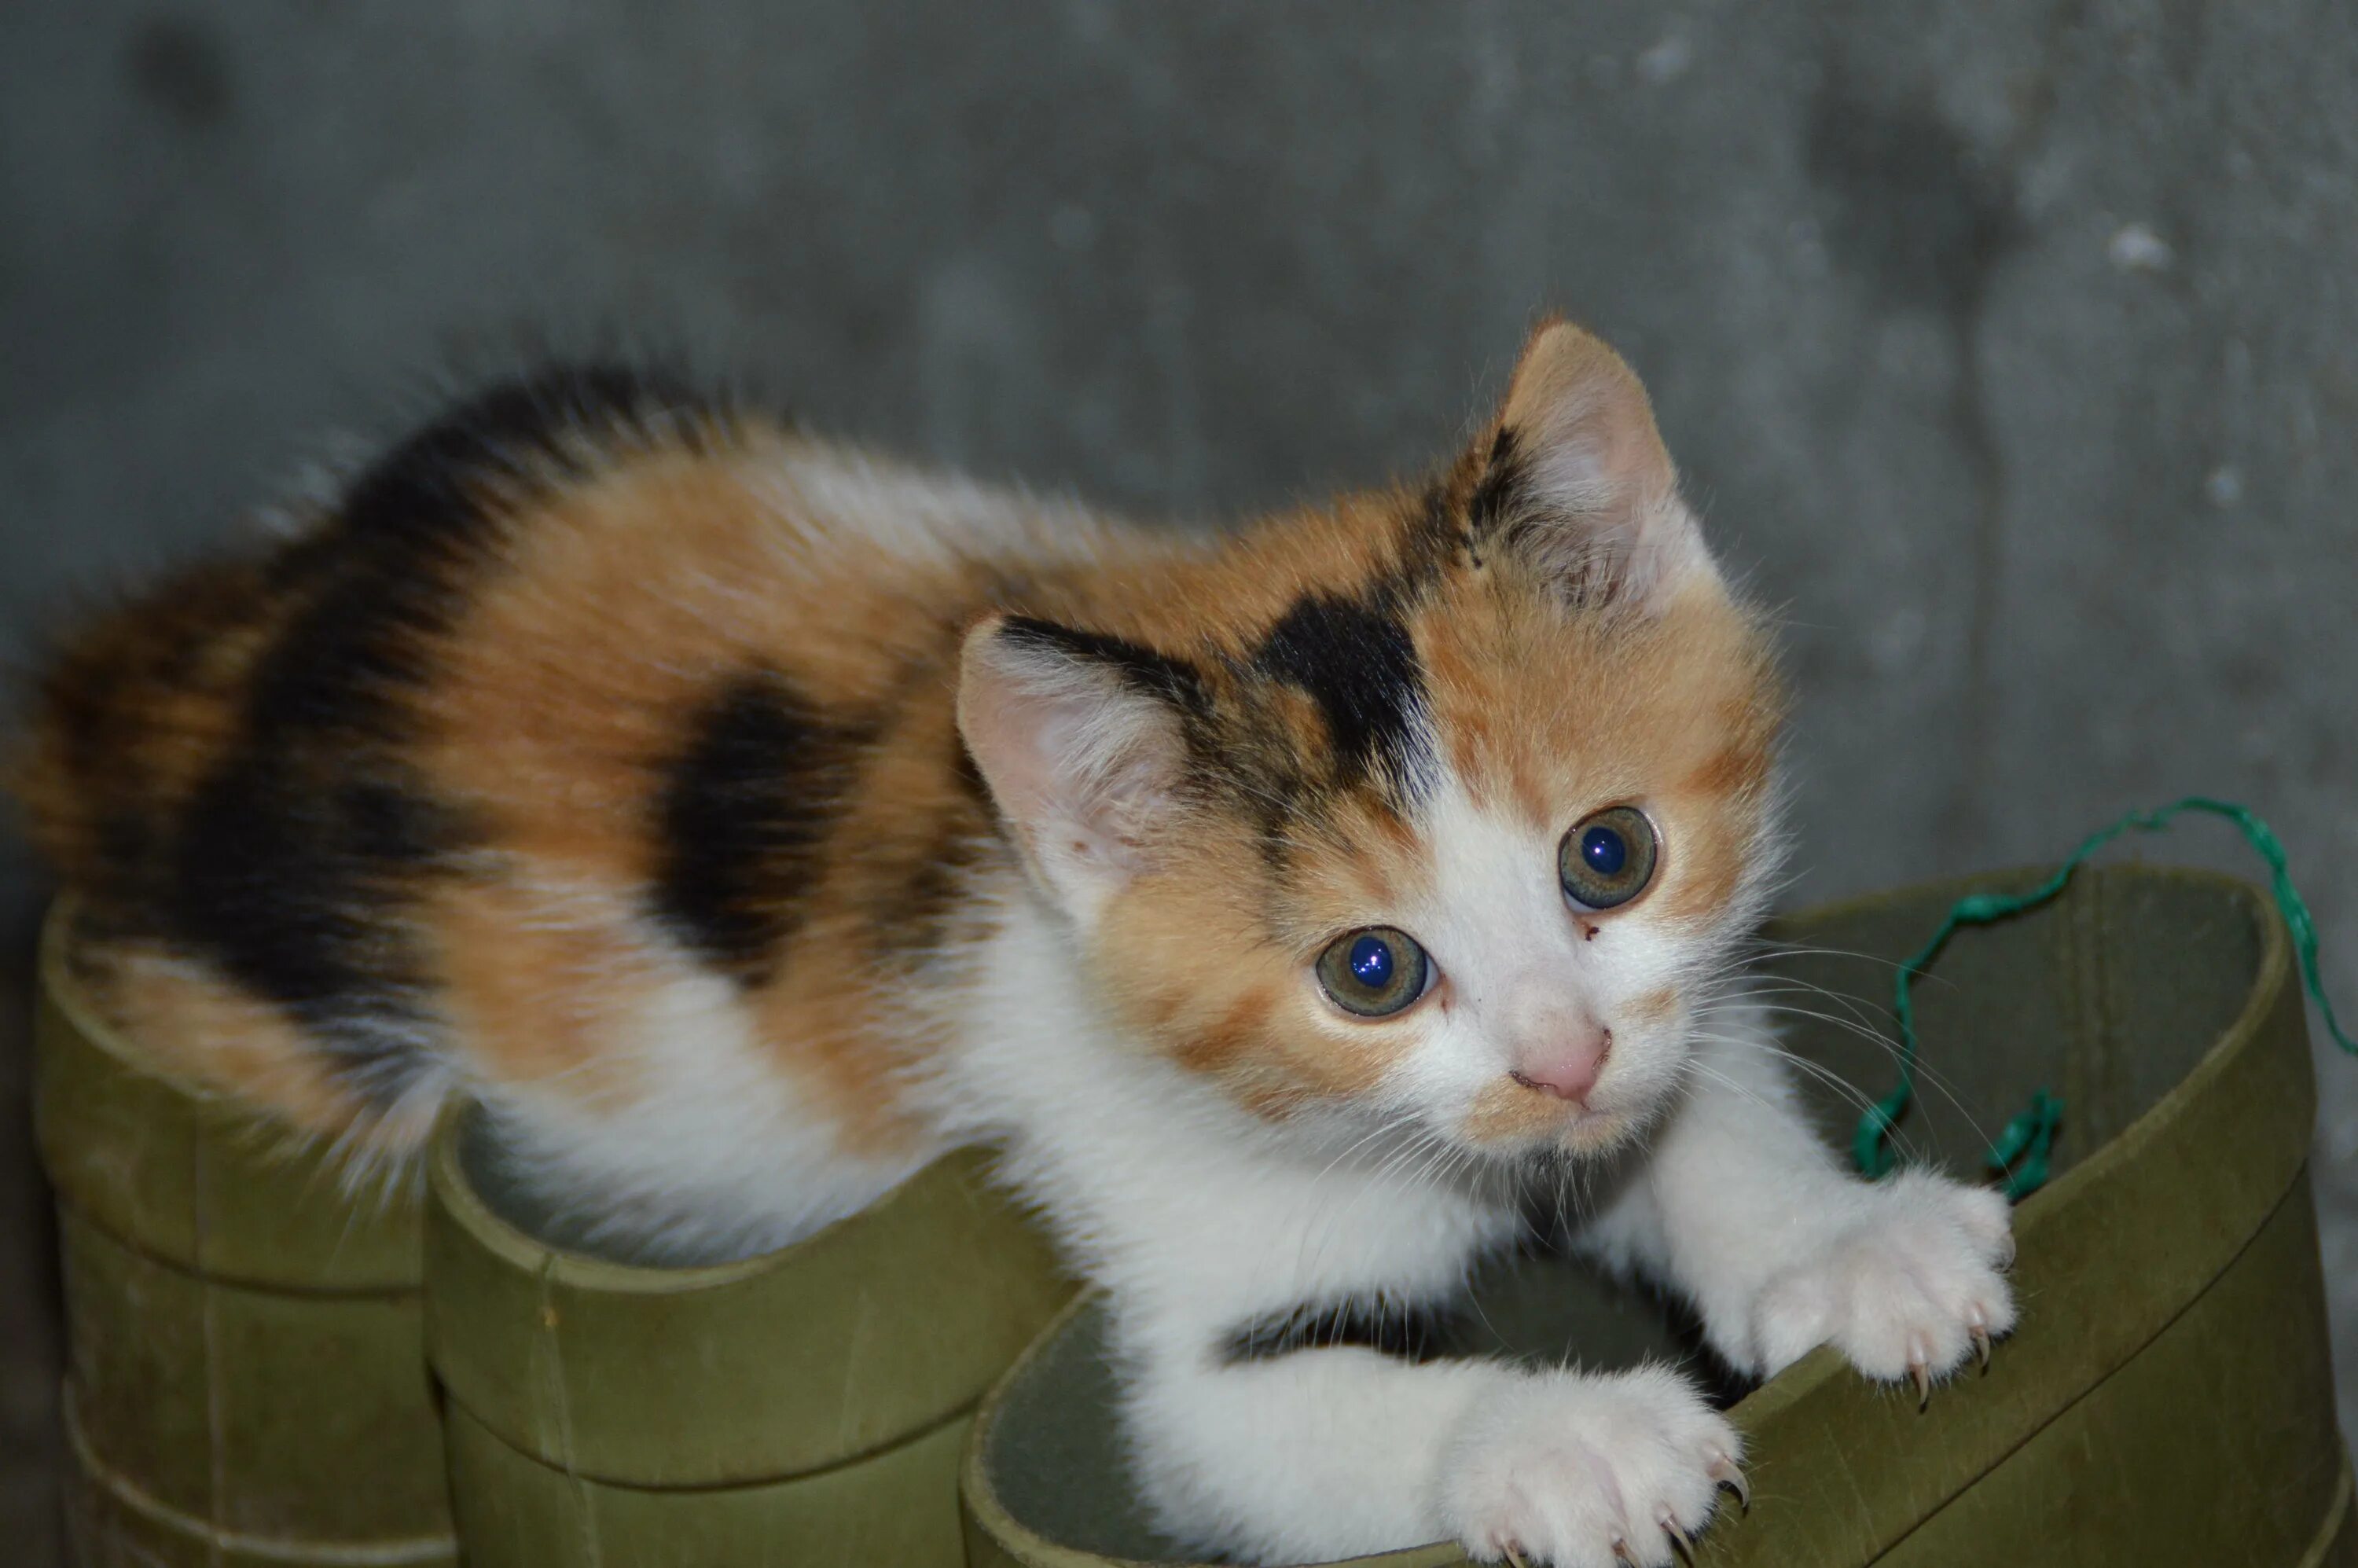 Трехшерстная кошка Калико. Трехцветные кошки Калико. Черепаховая кошка Калико. Беспородные кошки трёхцветные. Трехцветная кошечка